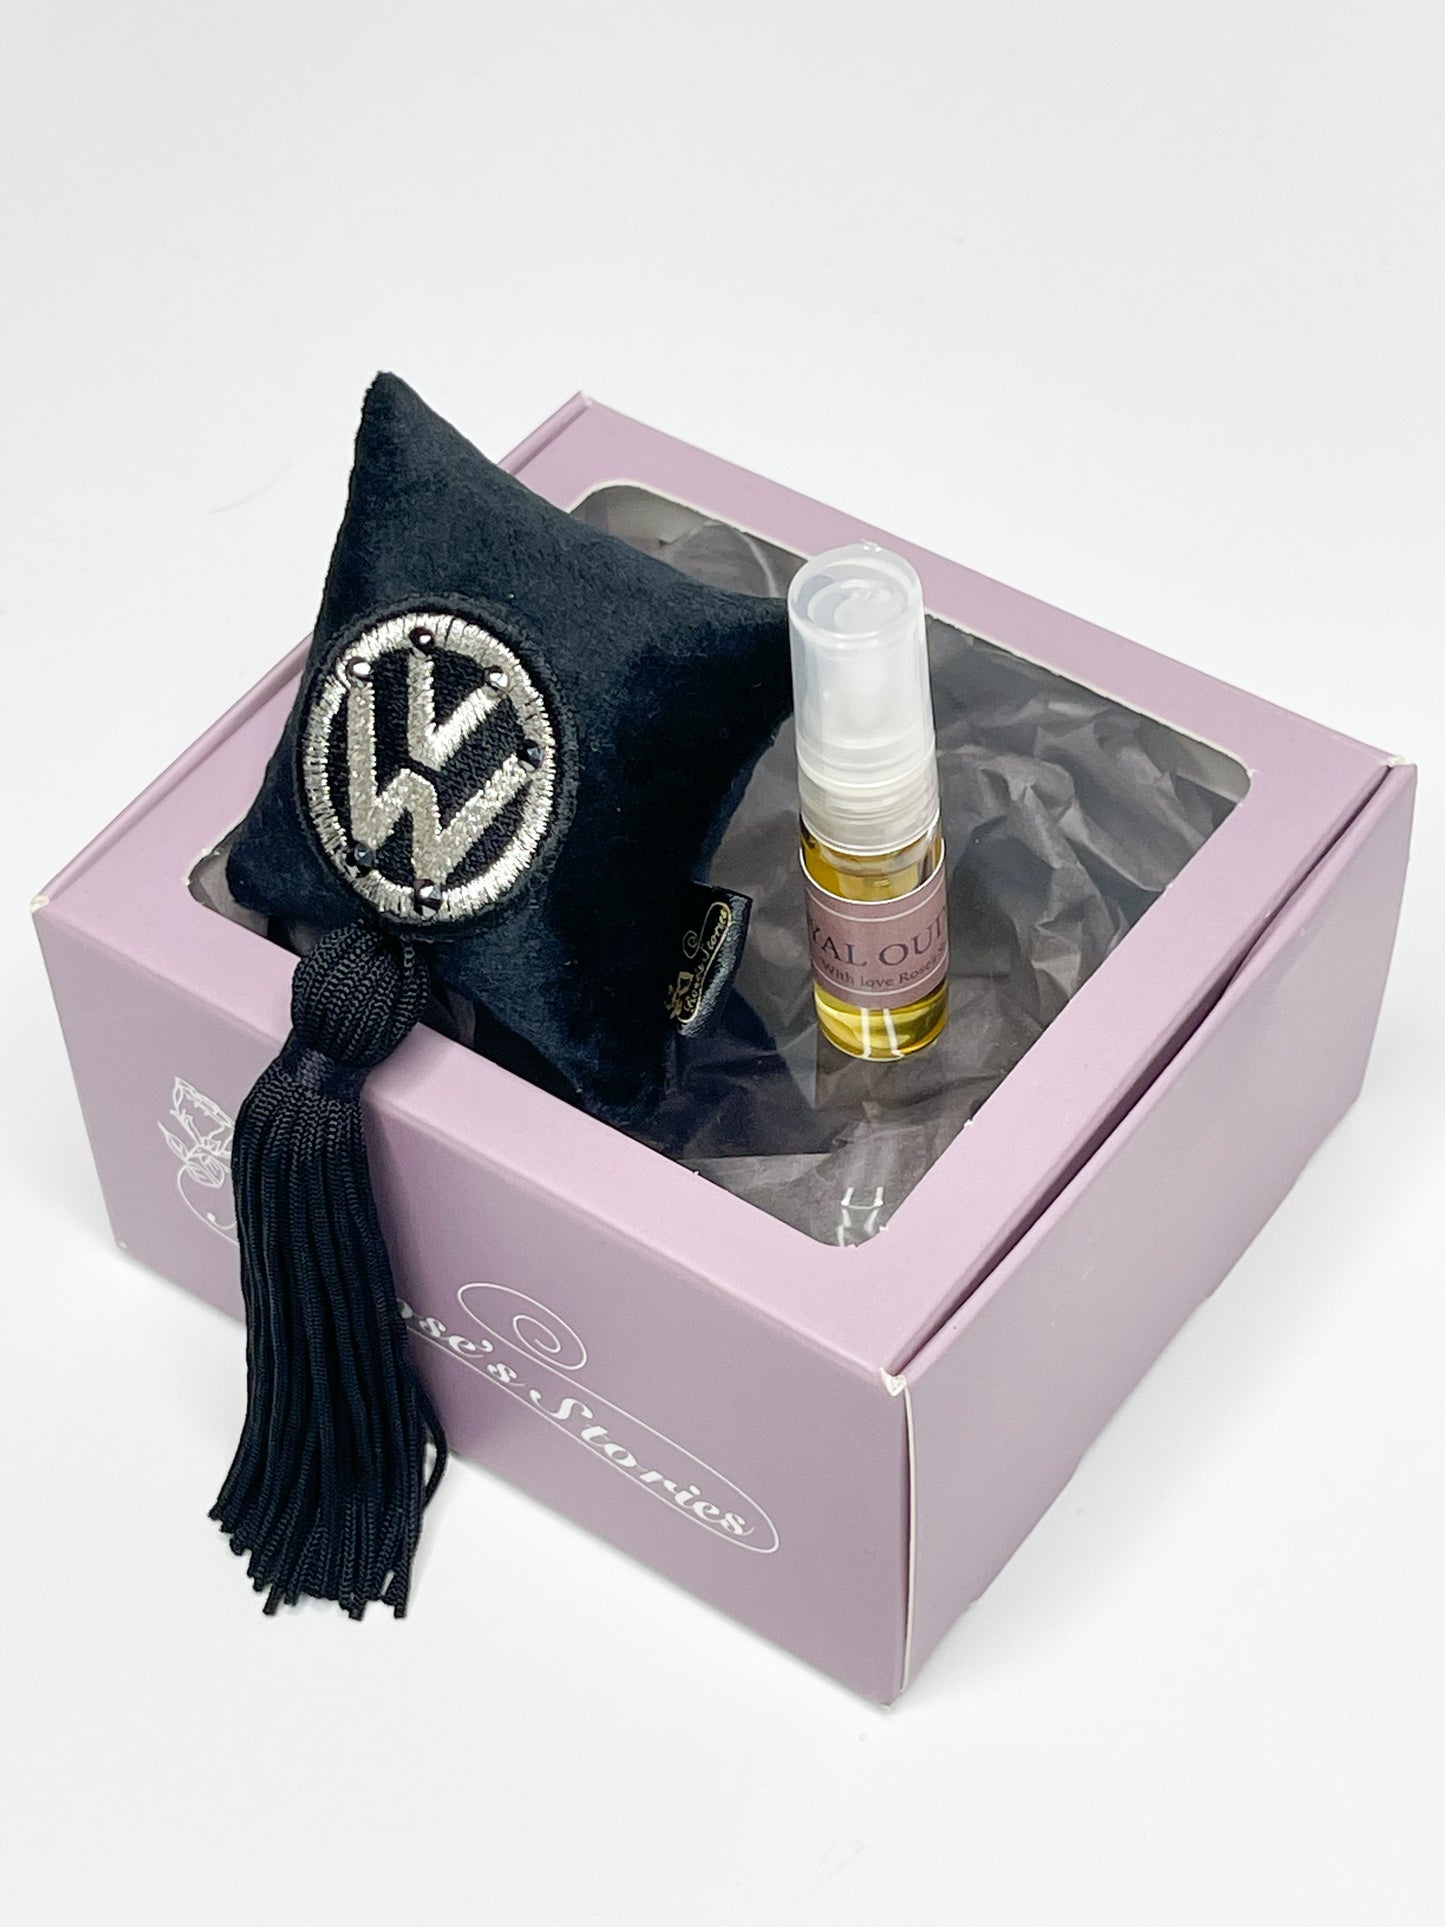 Car smell "Volkswagen"